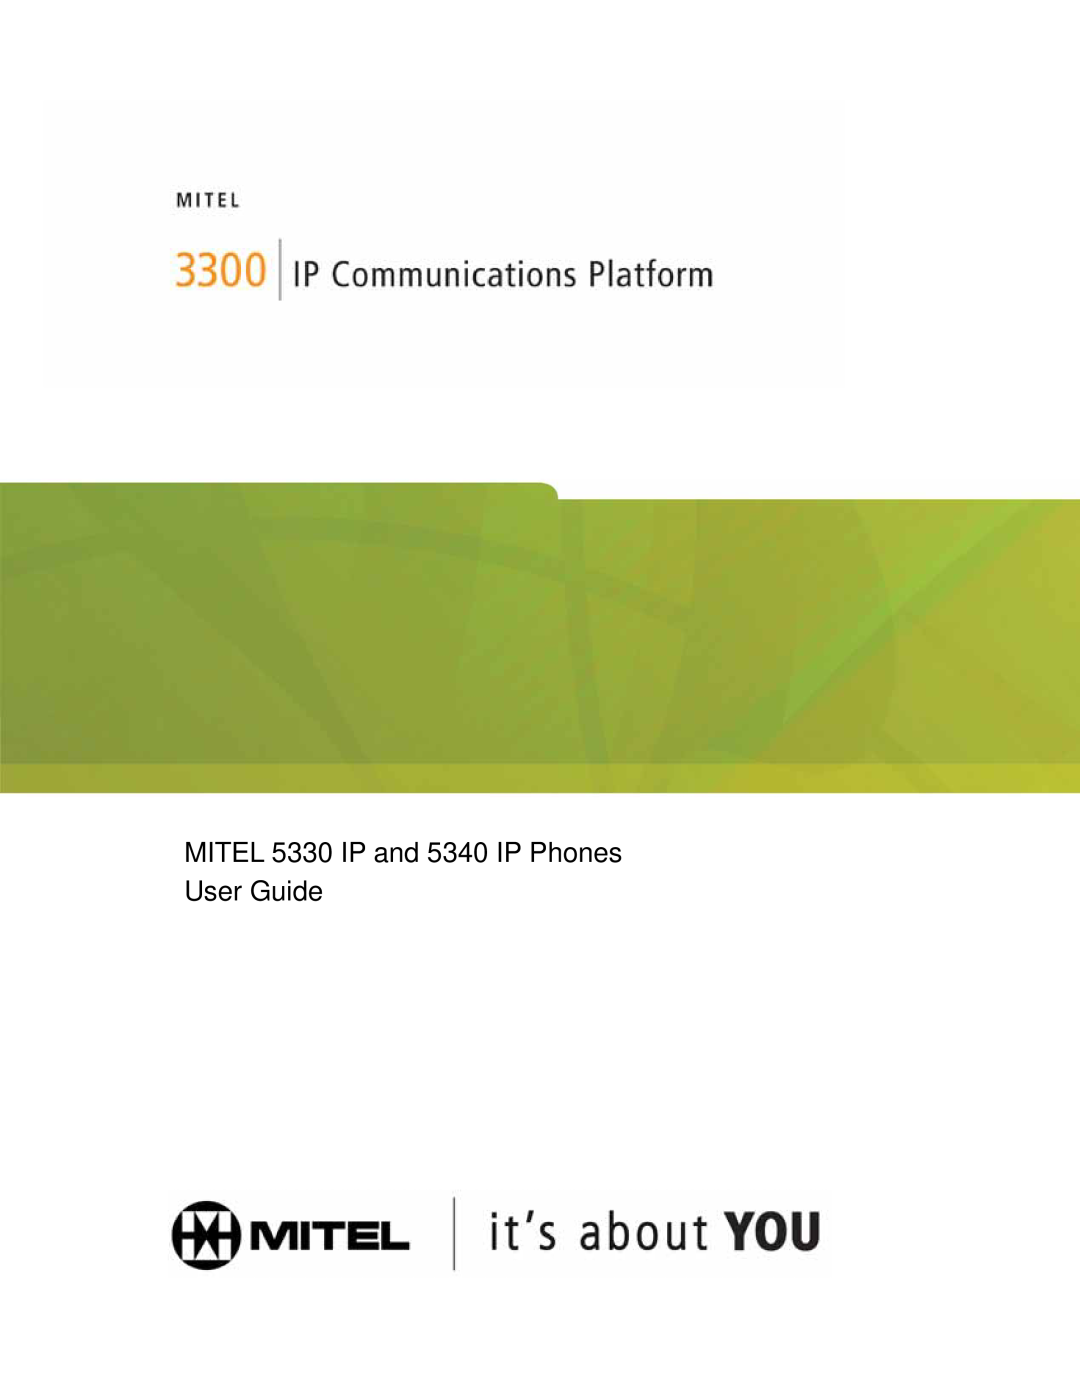 Mitel manual Communications Director Platform, MITEL 5330 AND 5340 IP PHONES USER GUIDE, Mitel 